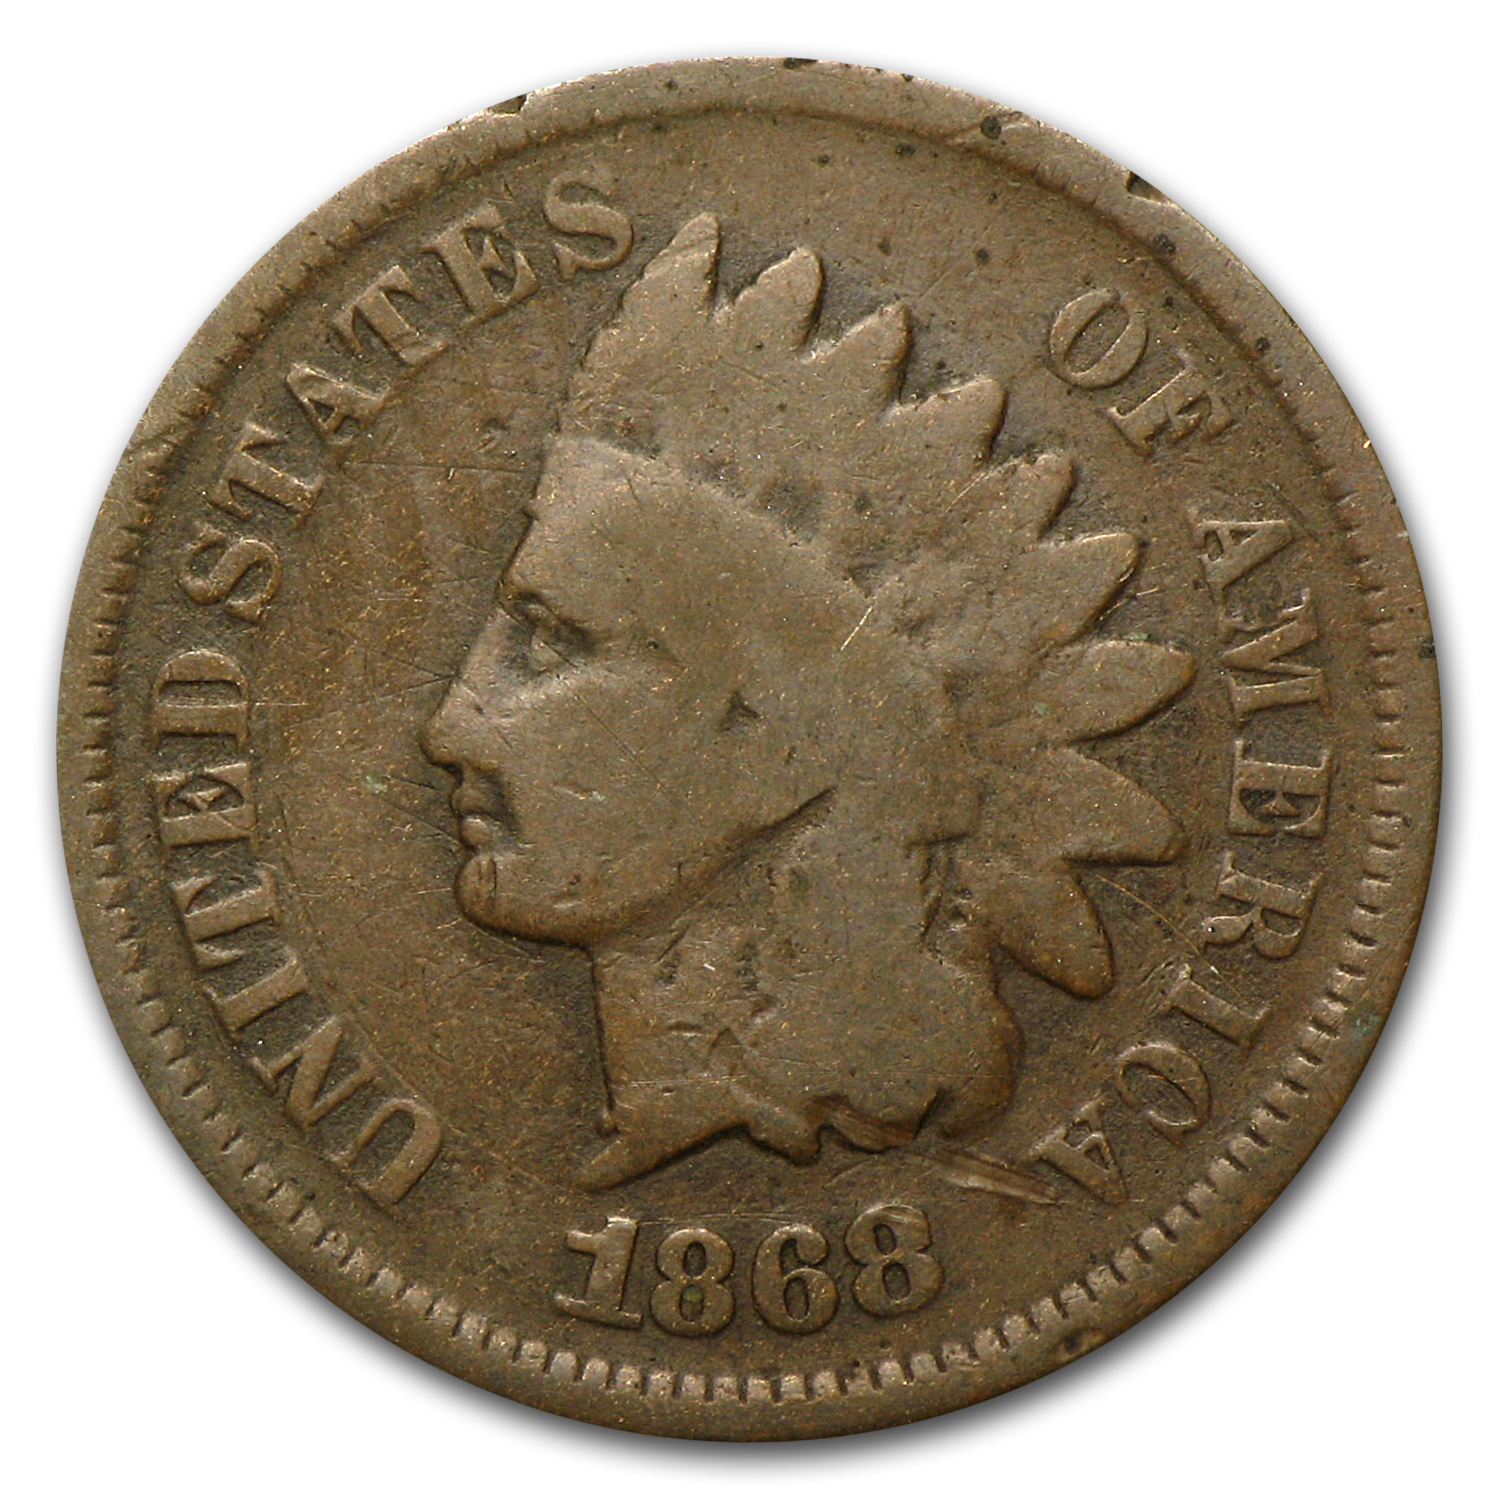 Buy 1868 Indian Head Cent Good